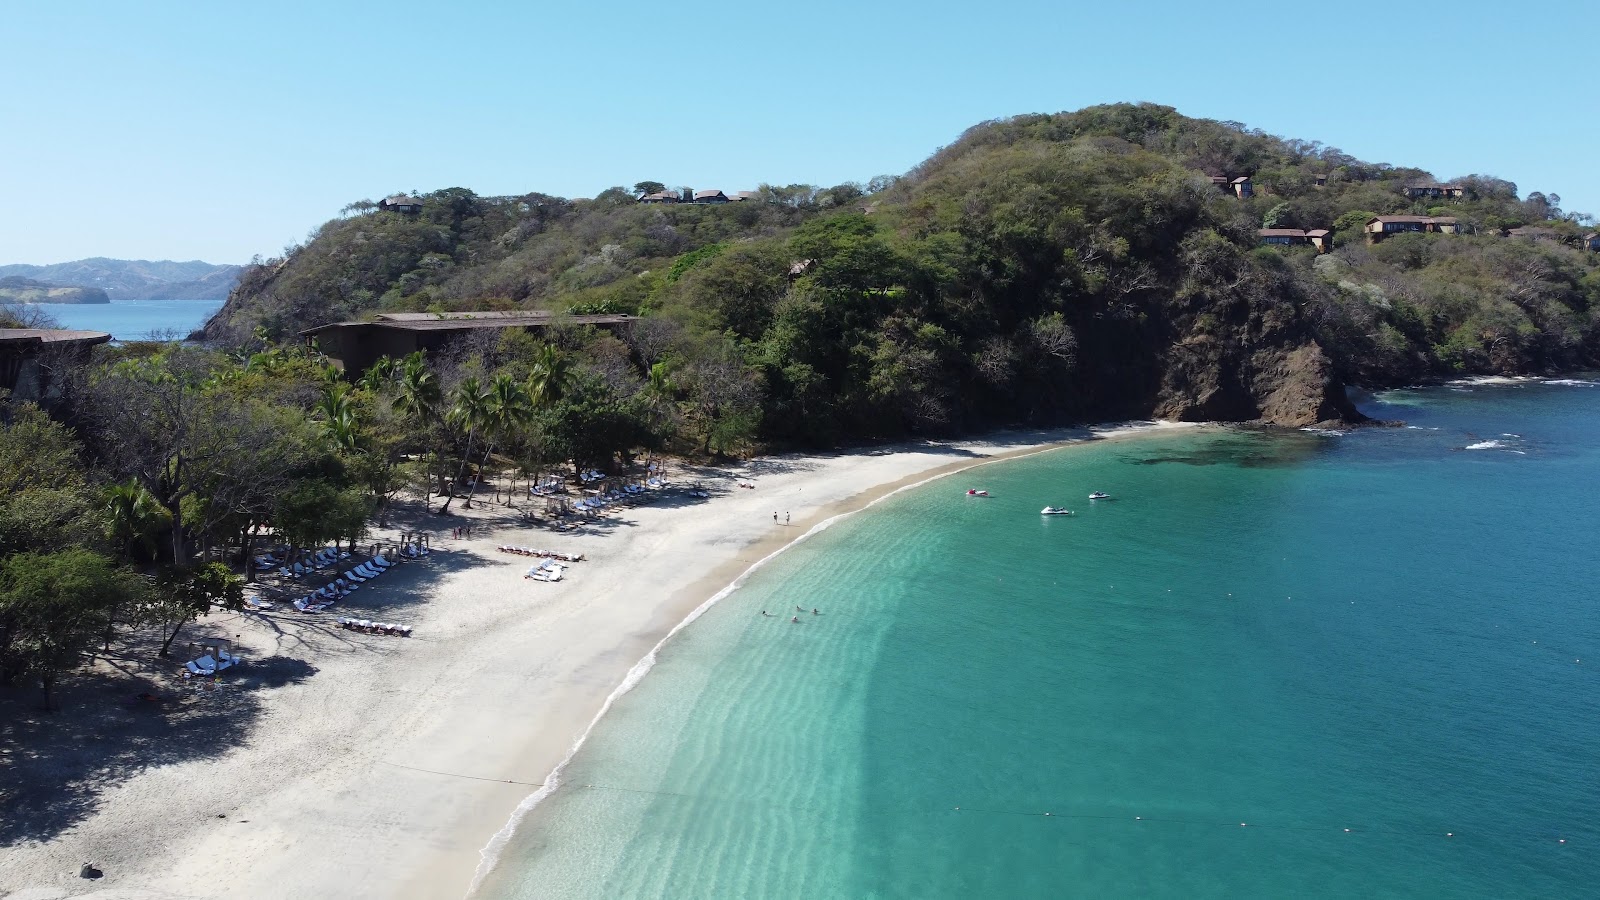 Foto di Virador beach ubicato in zona naturale